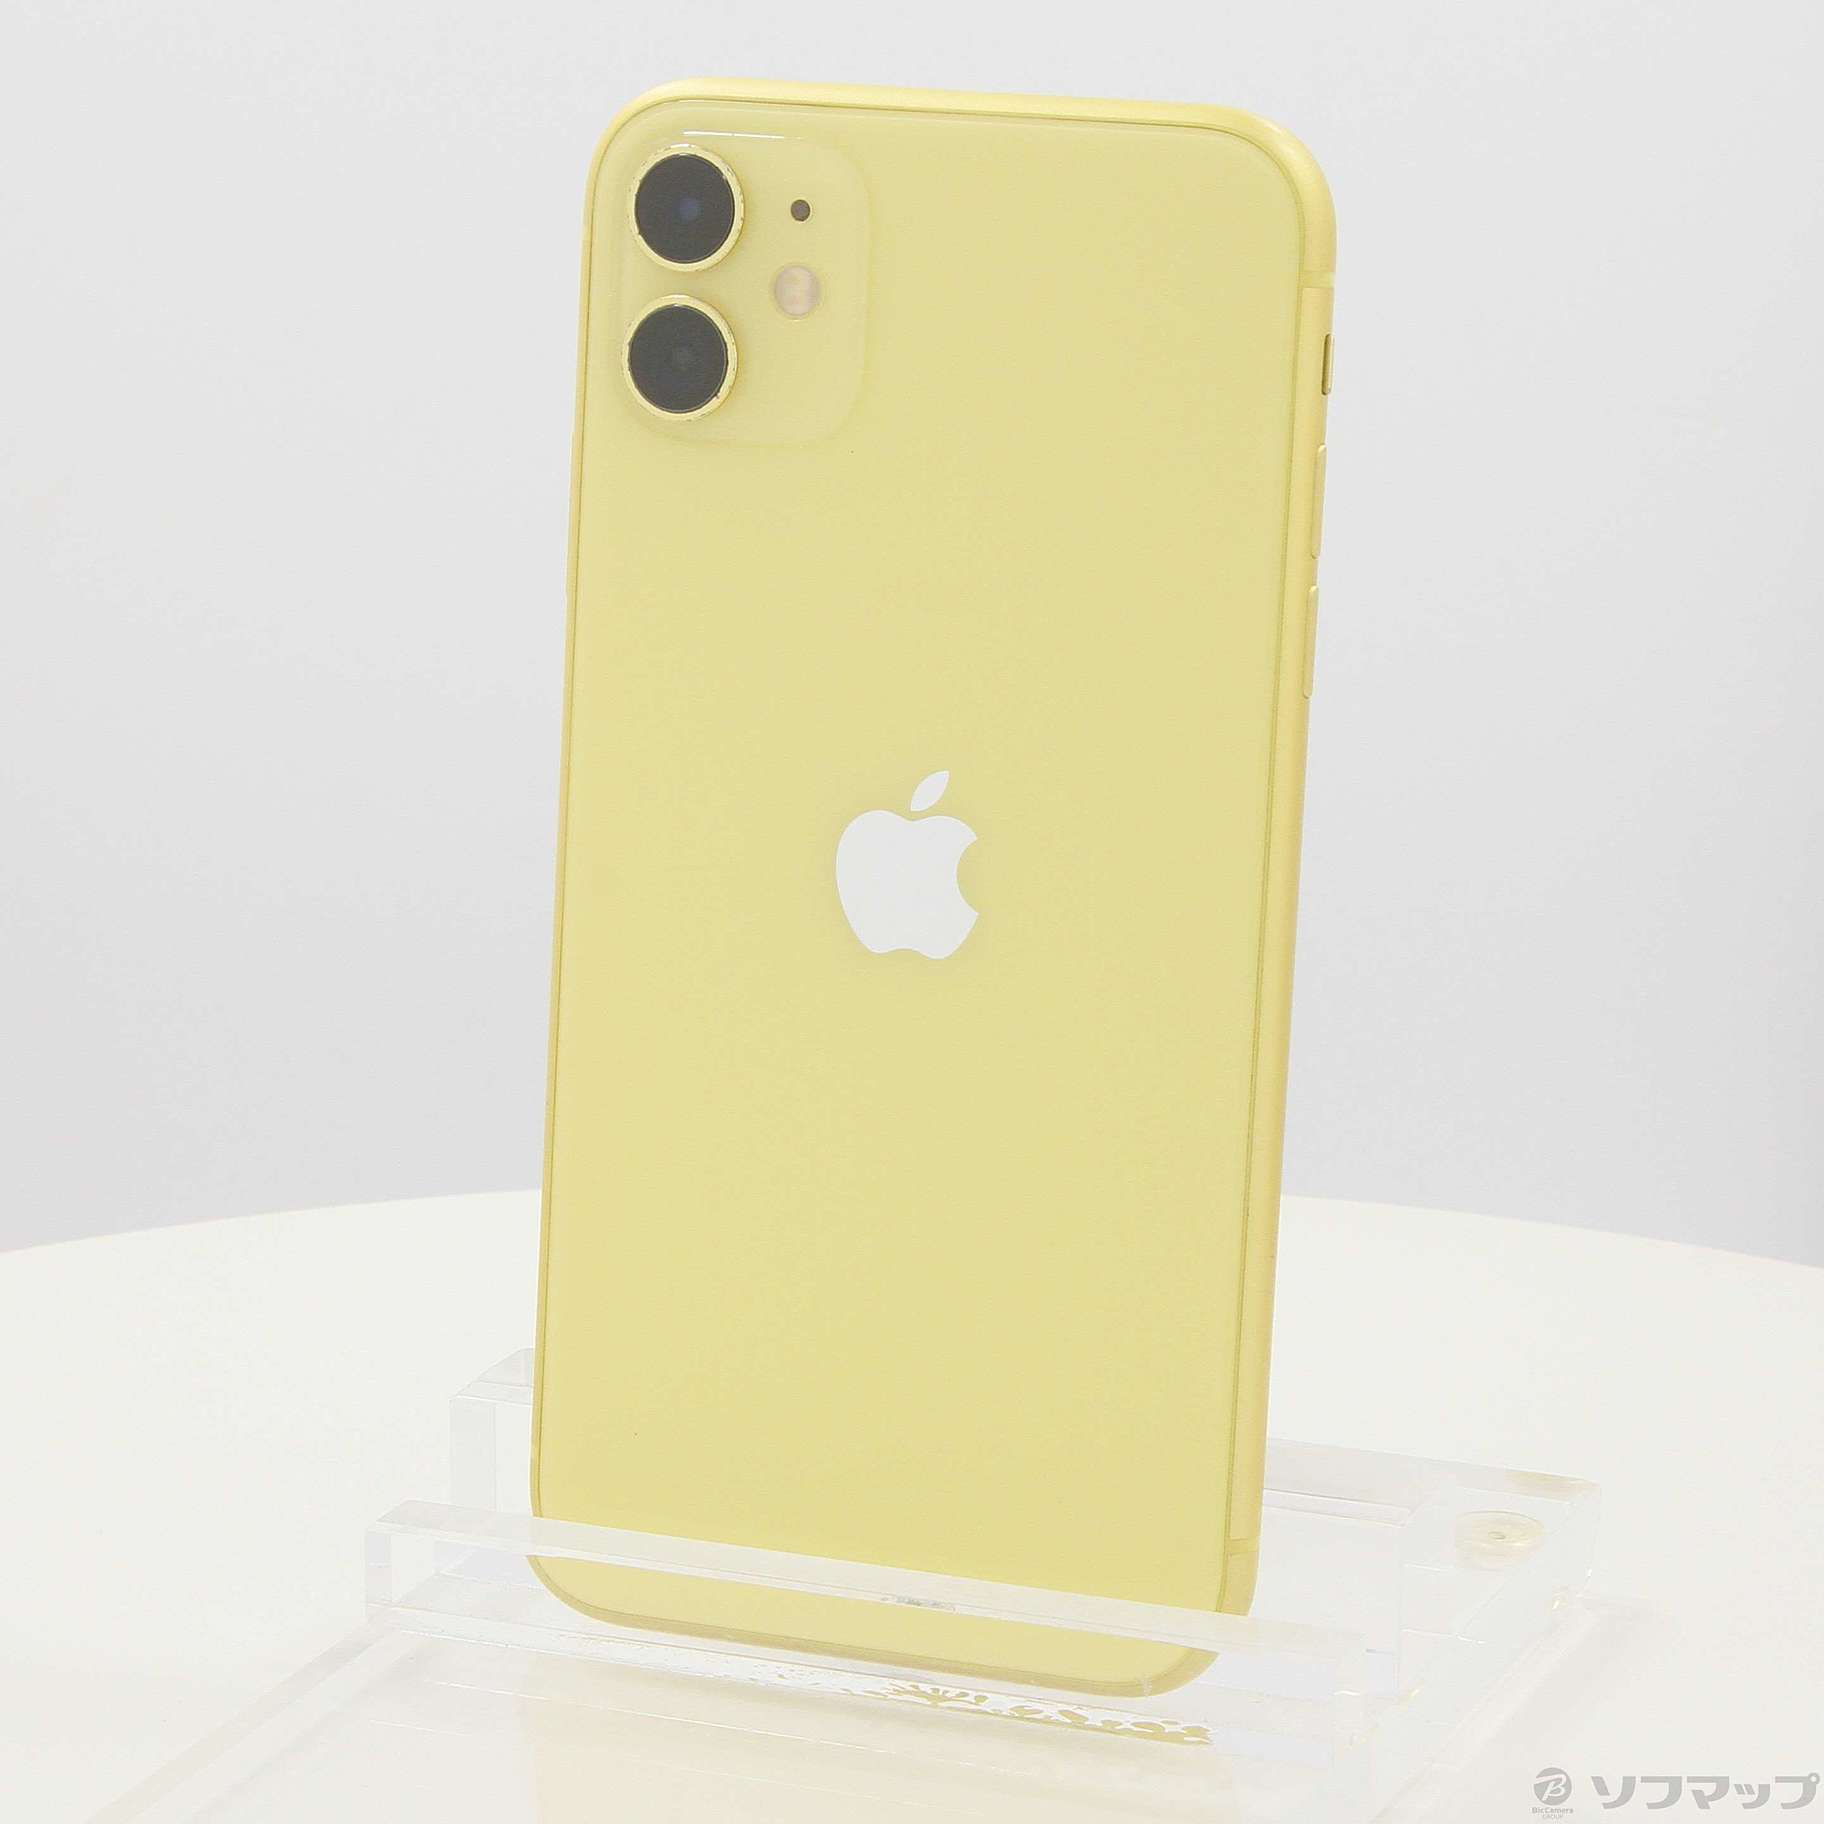 iPhone 11 64GB SIMフリー [イエロー] 中古(白ロム)価格比較 - 価格.com